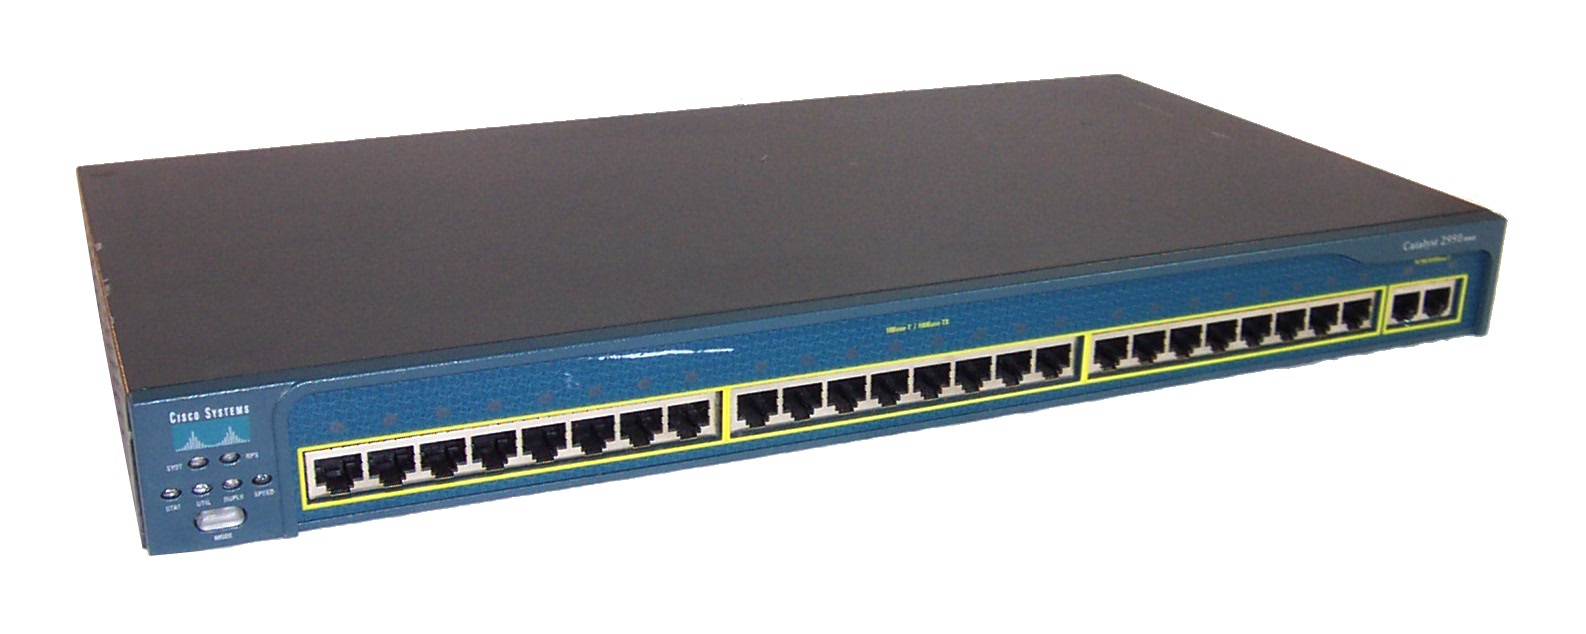 Cisco 2950 Switch 24-Port